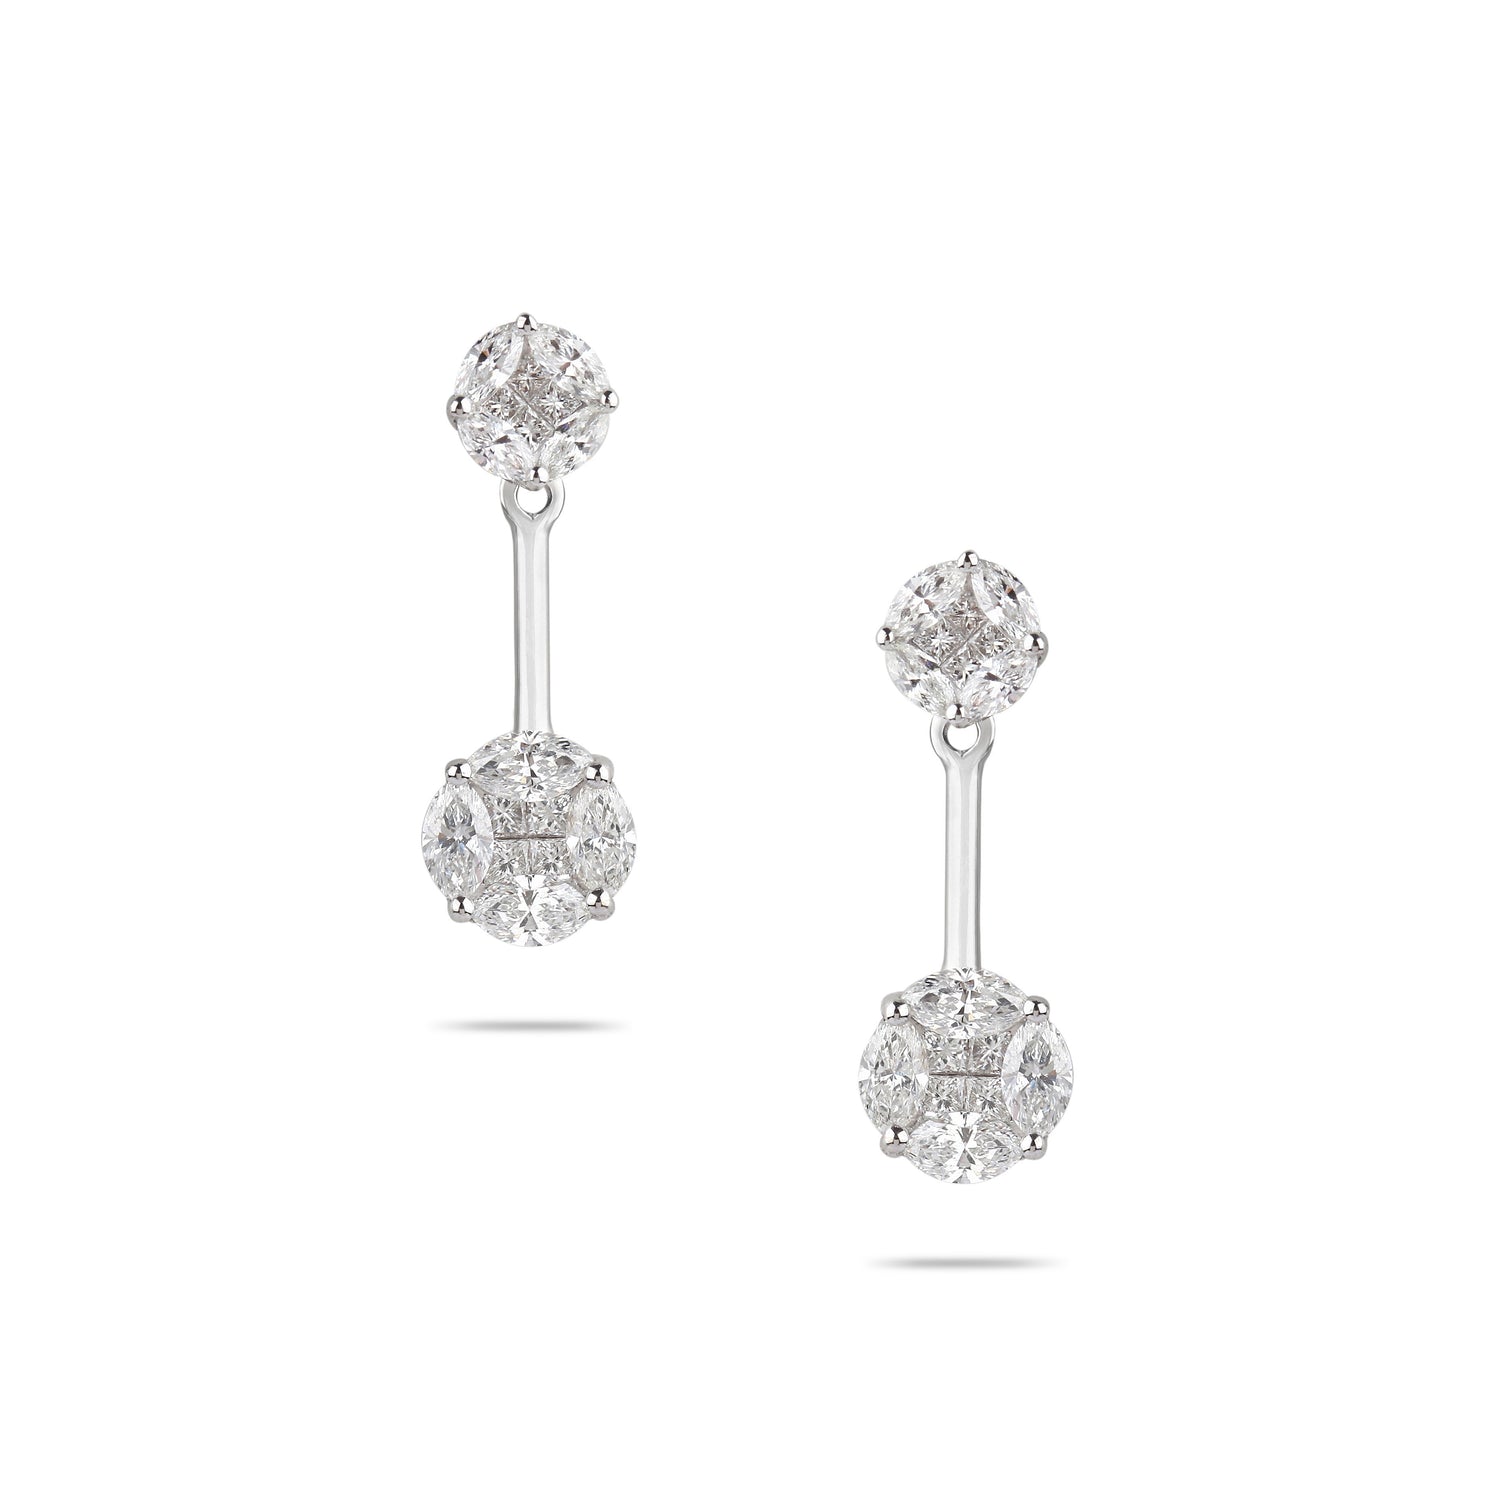  Medium Attachable Illusion Diamond Stud Earrings | Jewelry online